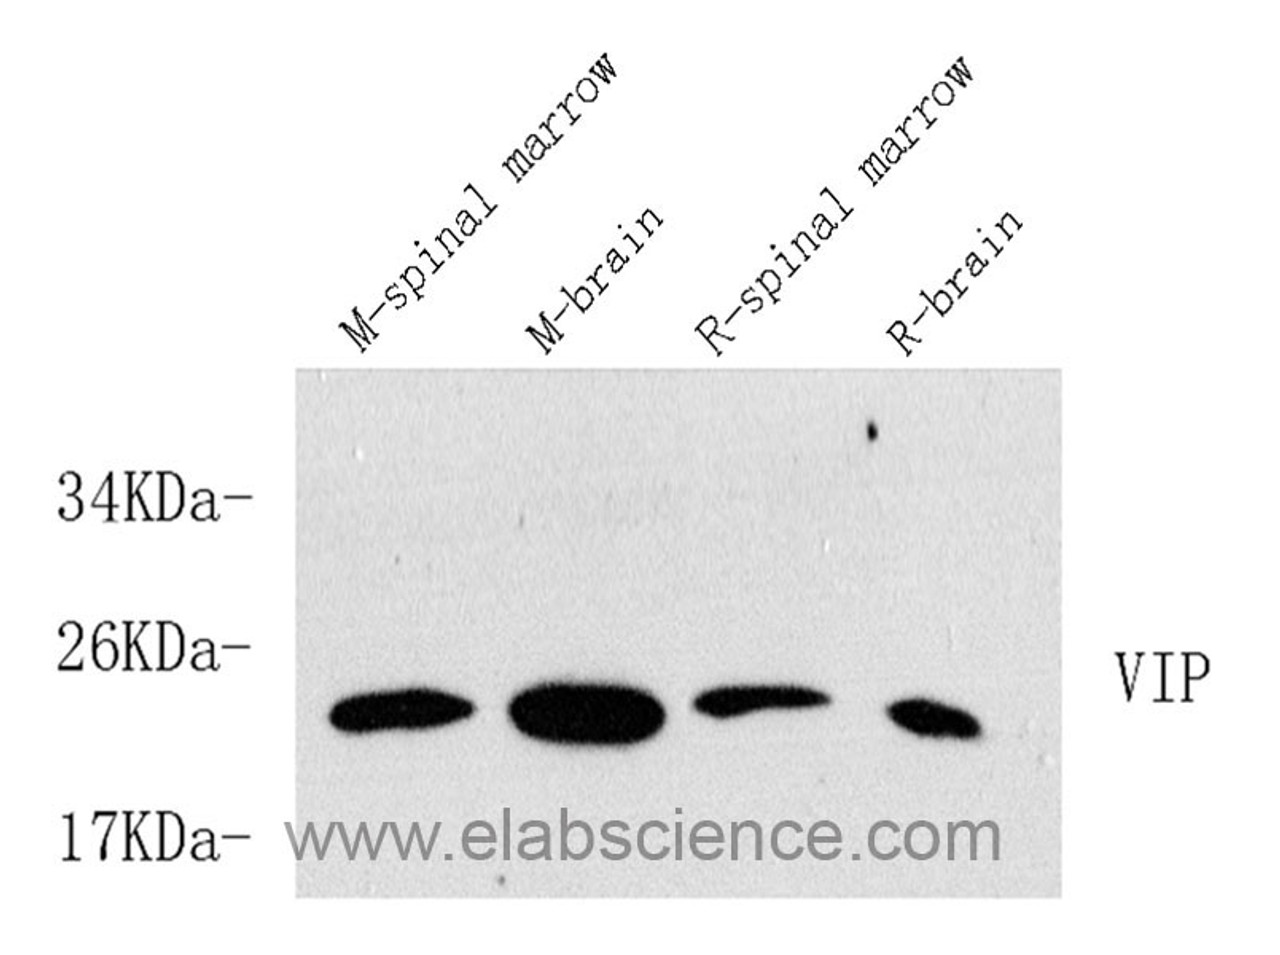 Western Blot analysis of various samples using VIP Polyclonal Antibody at dilution of 1:600.